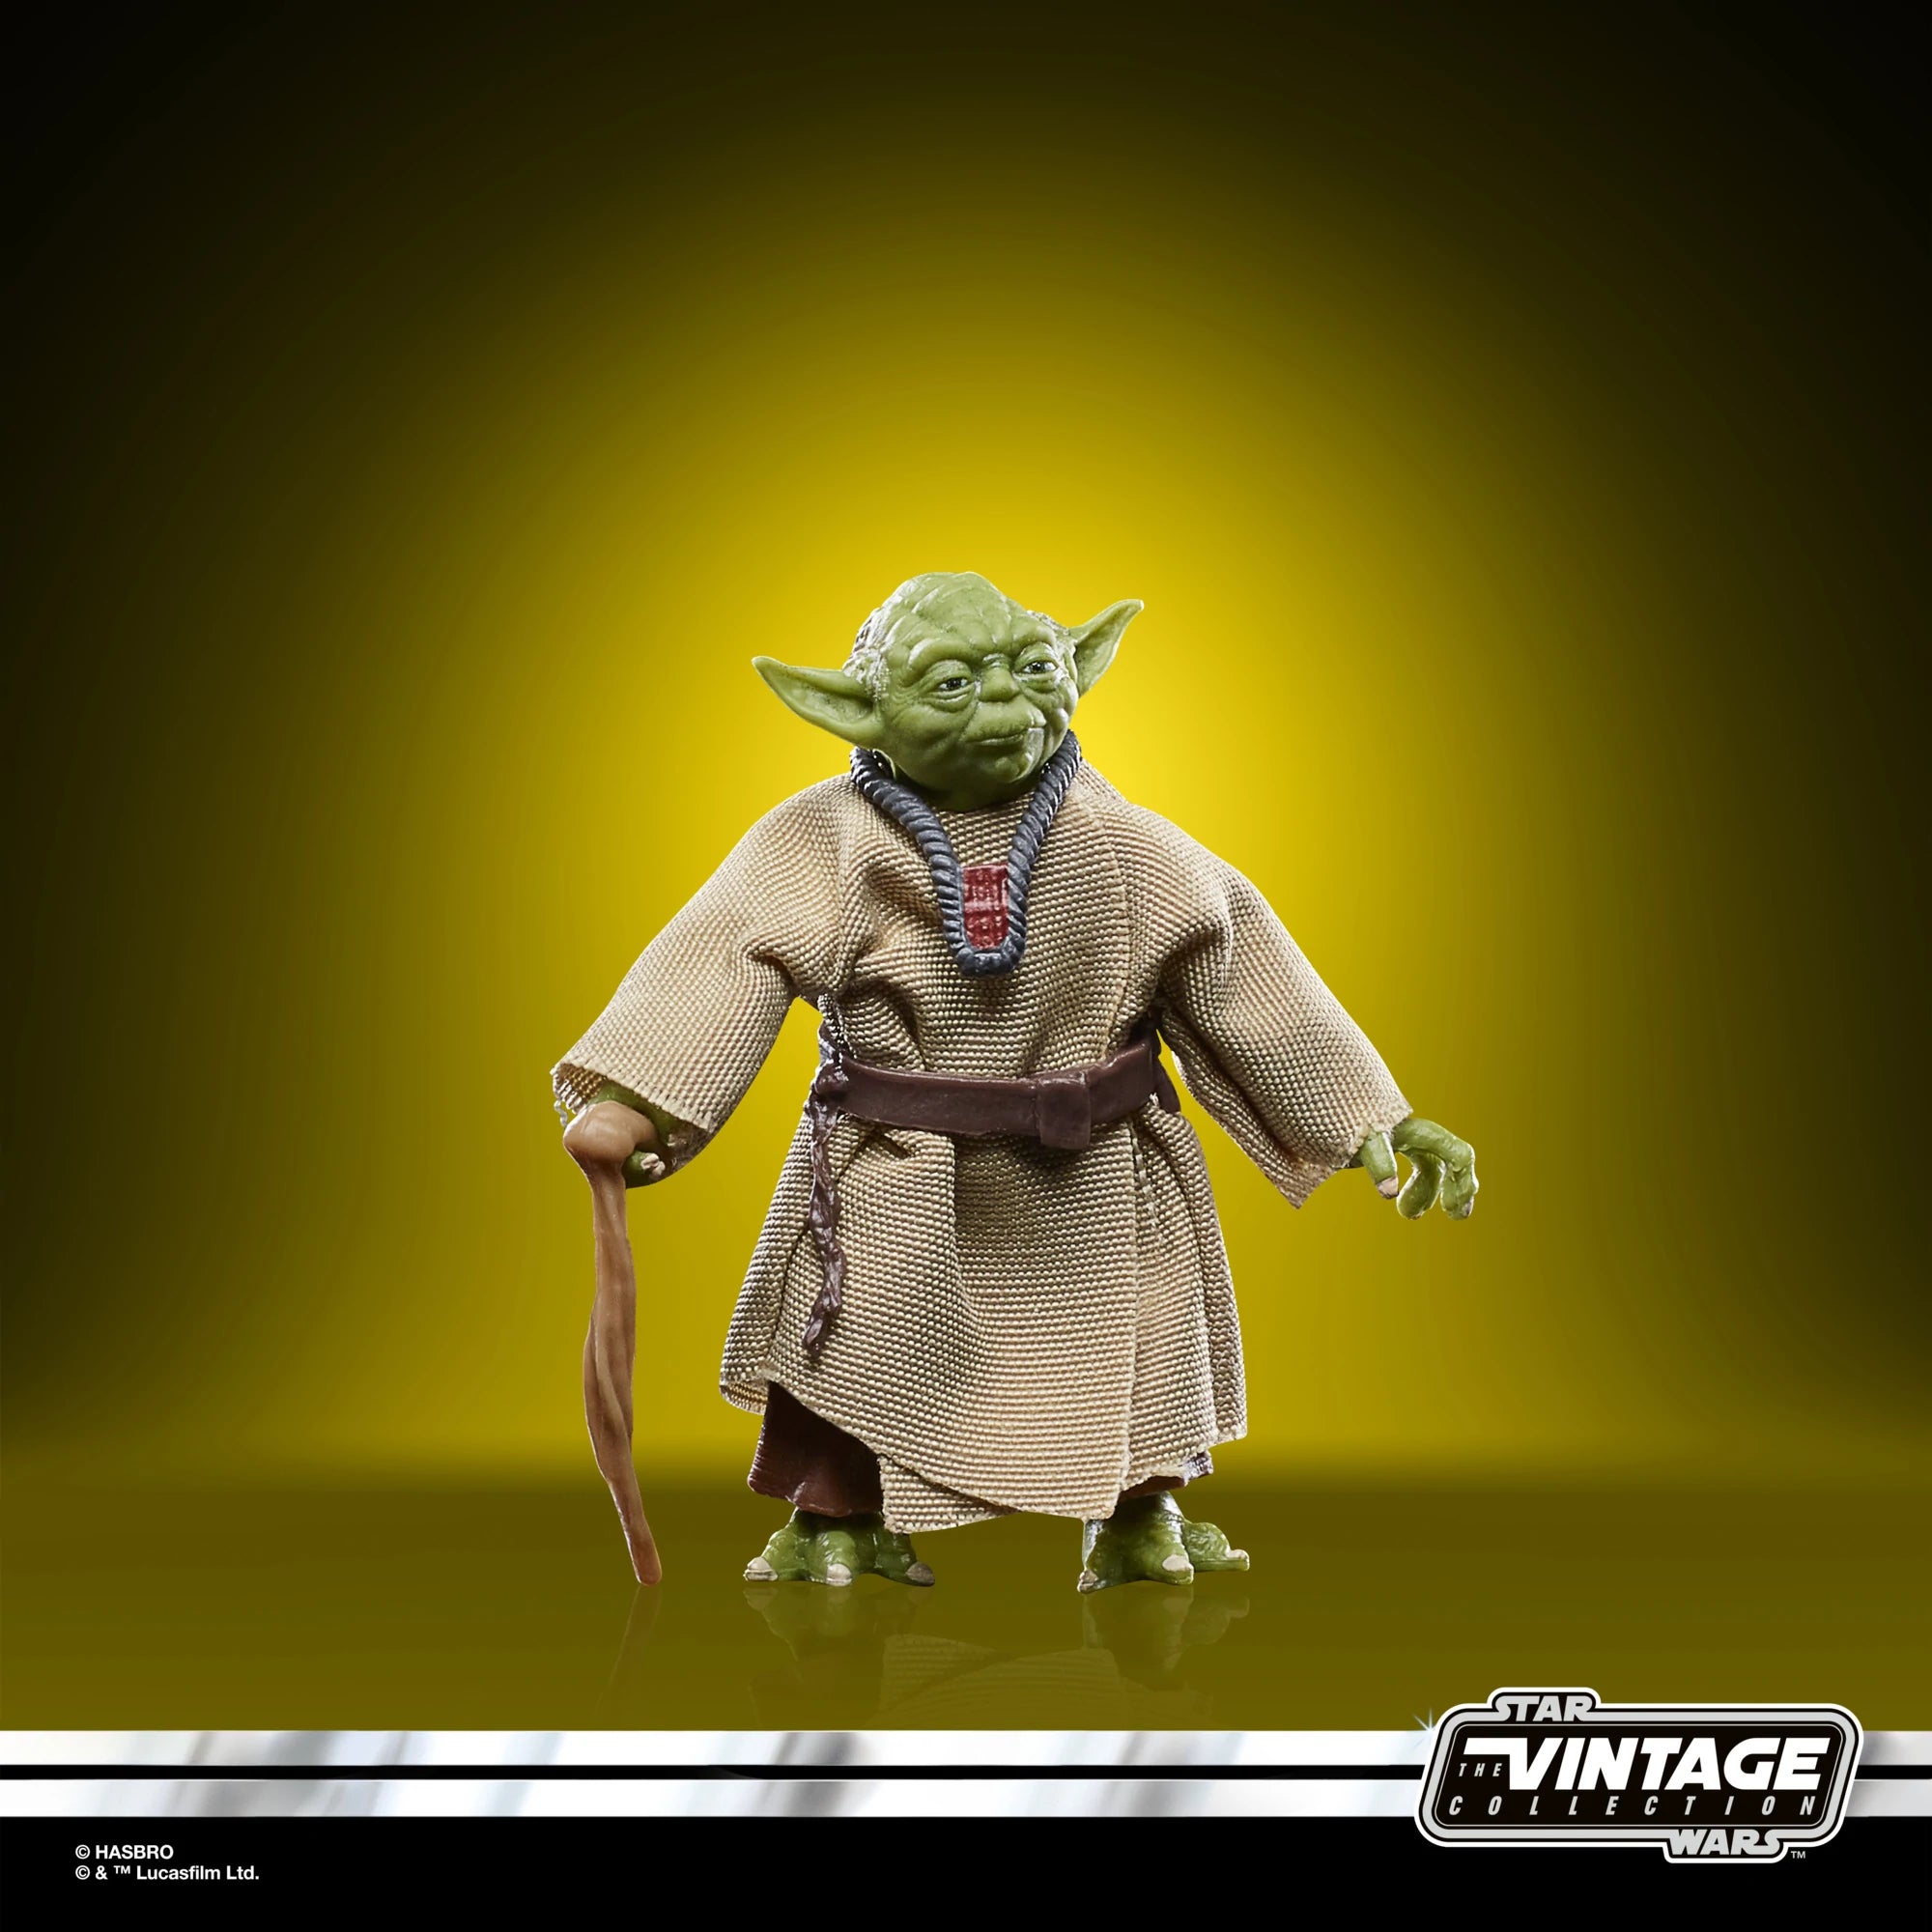 The Vintage Collection - Empire Strikes Back - Yoda[Dagobah]